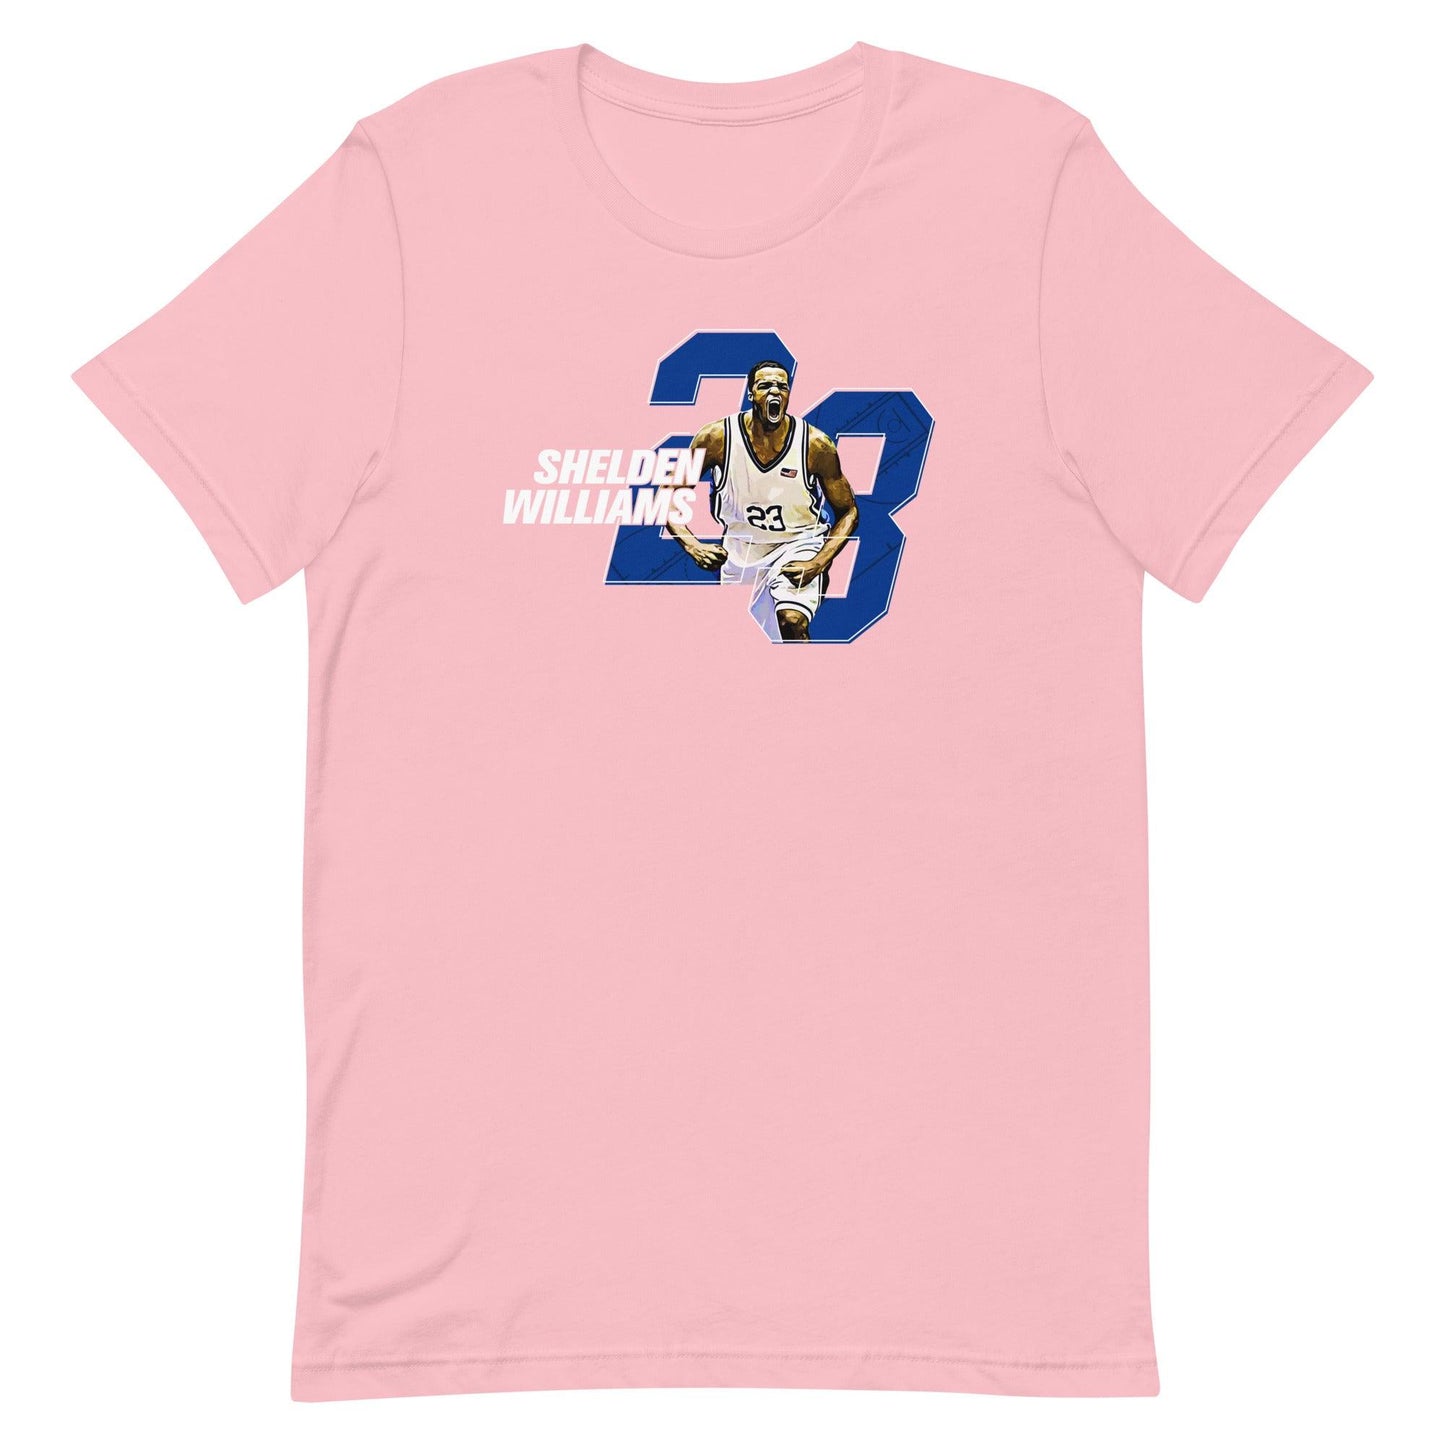 Shelden Williams "Throwback" t-shirt - Fan Arch